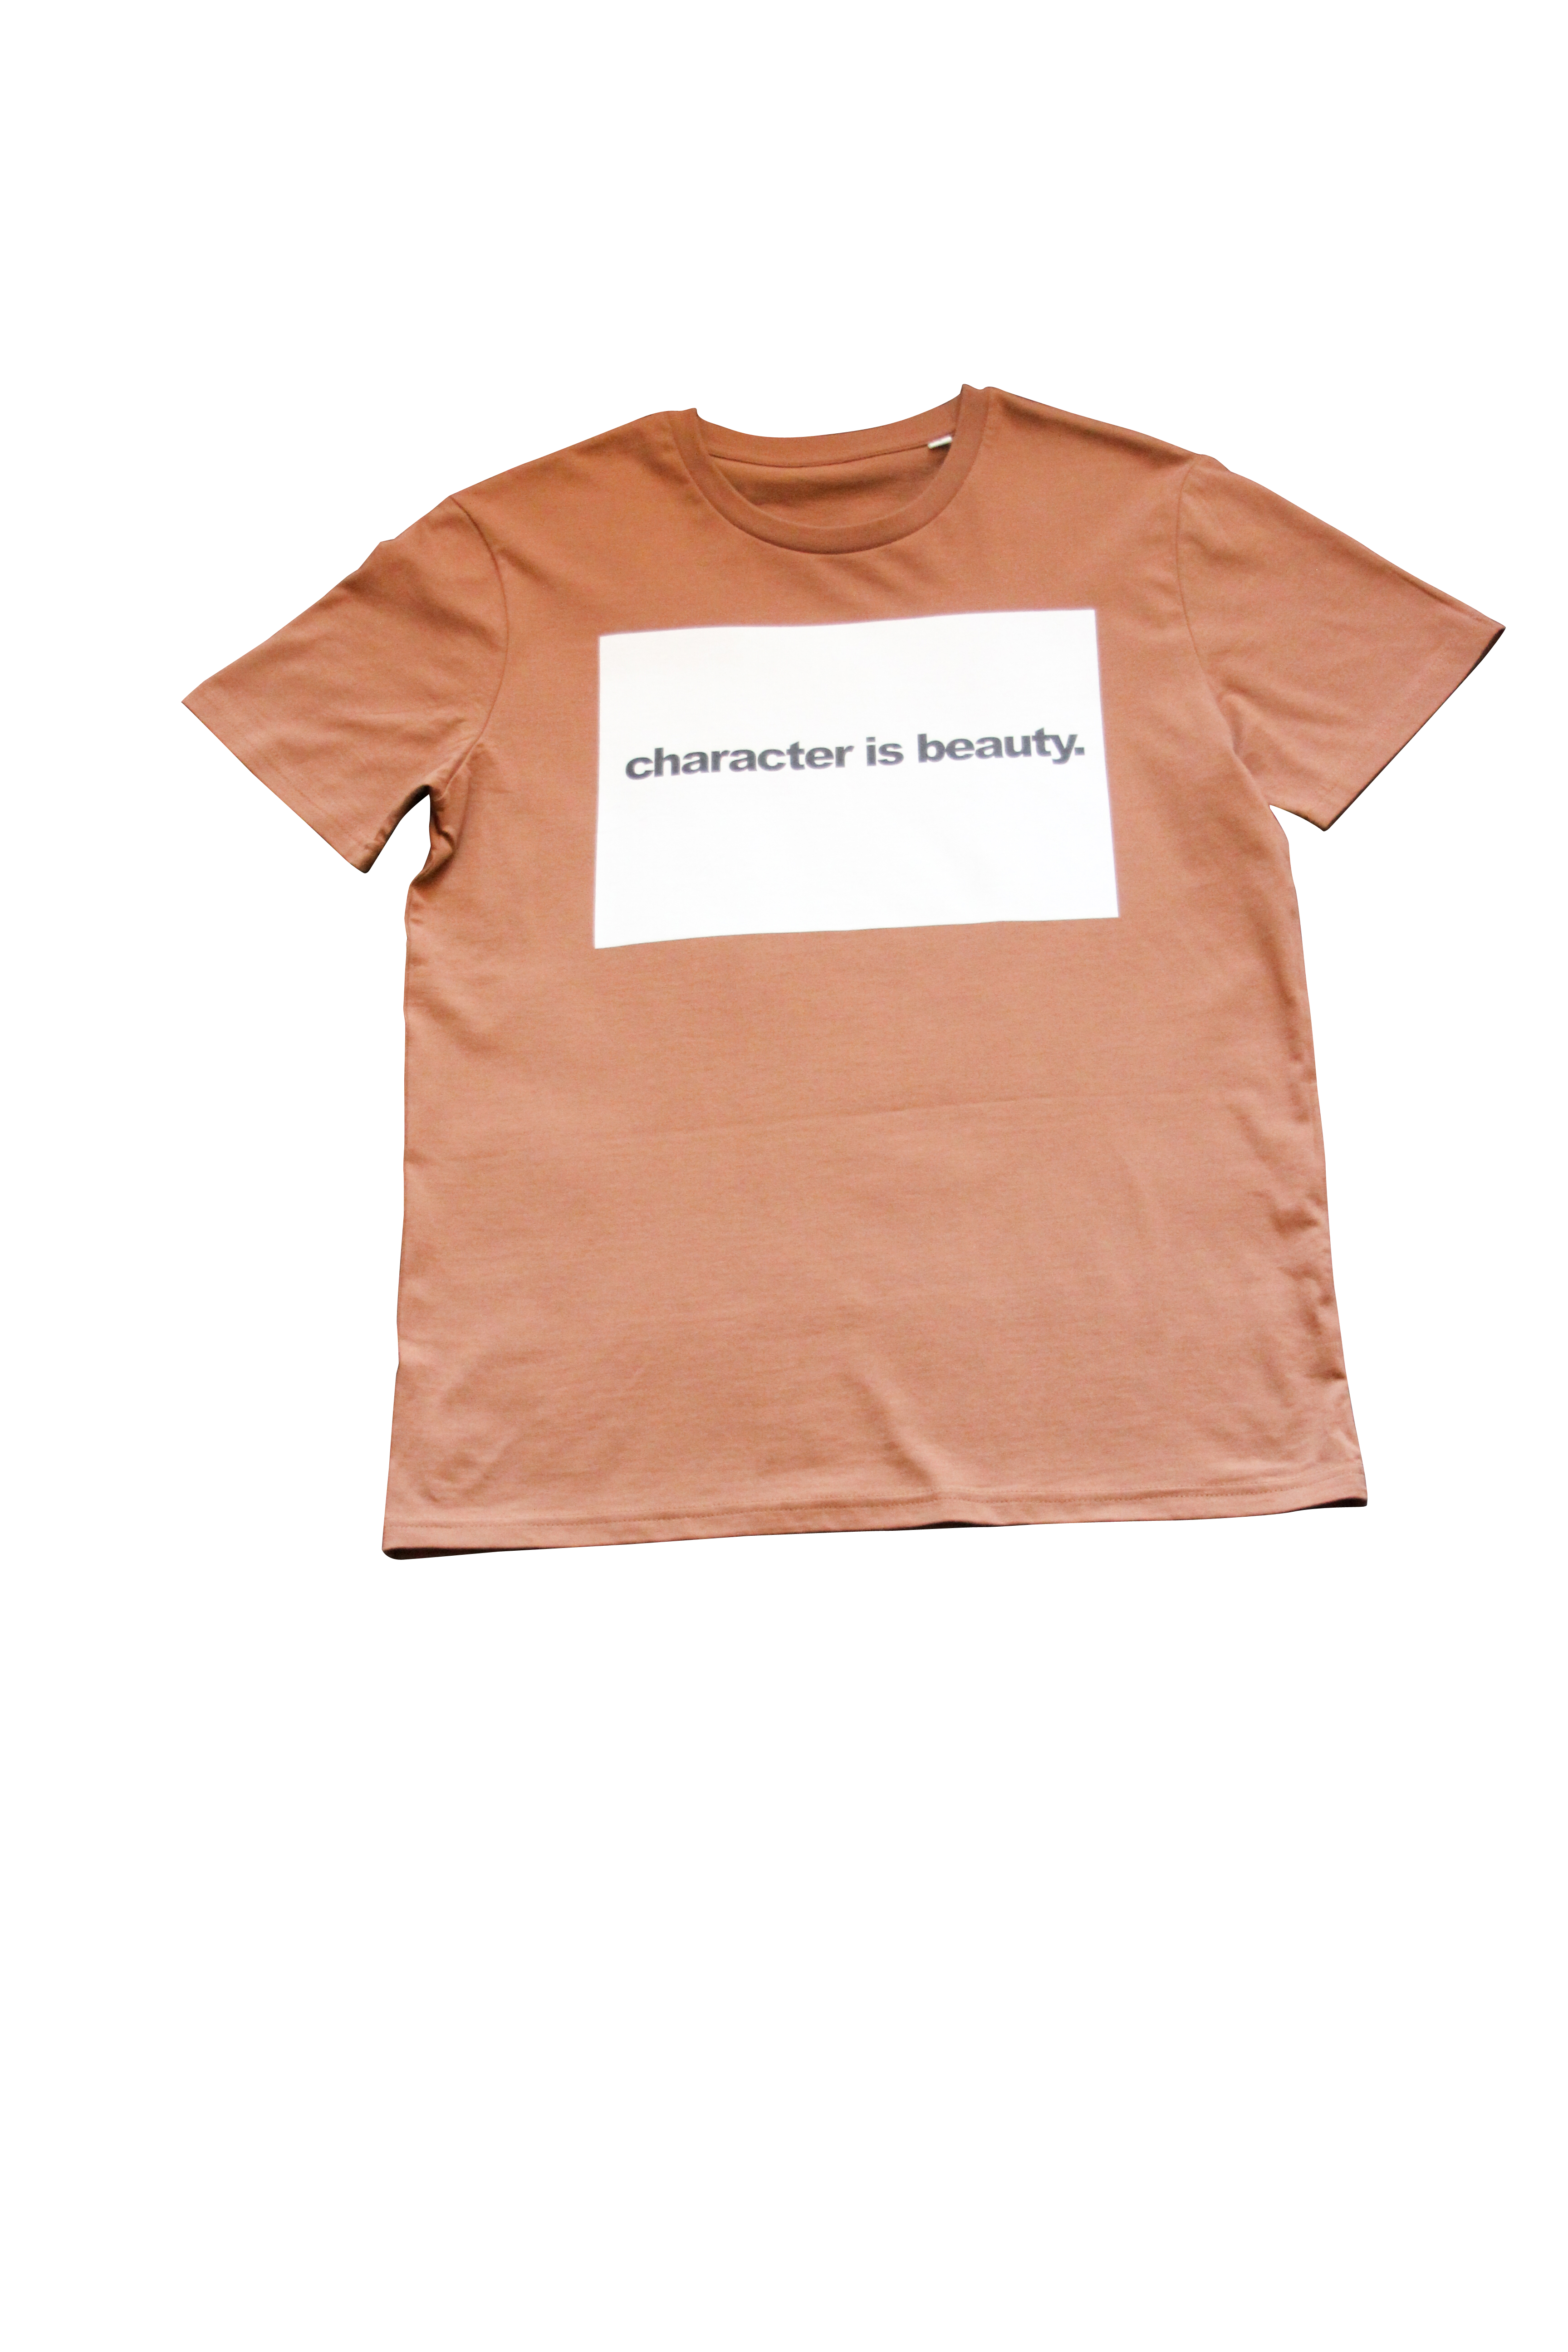 "Character Is Beauty" - T-Shirt (Caramel)